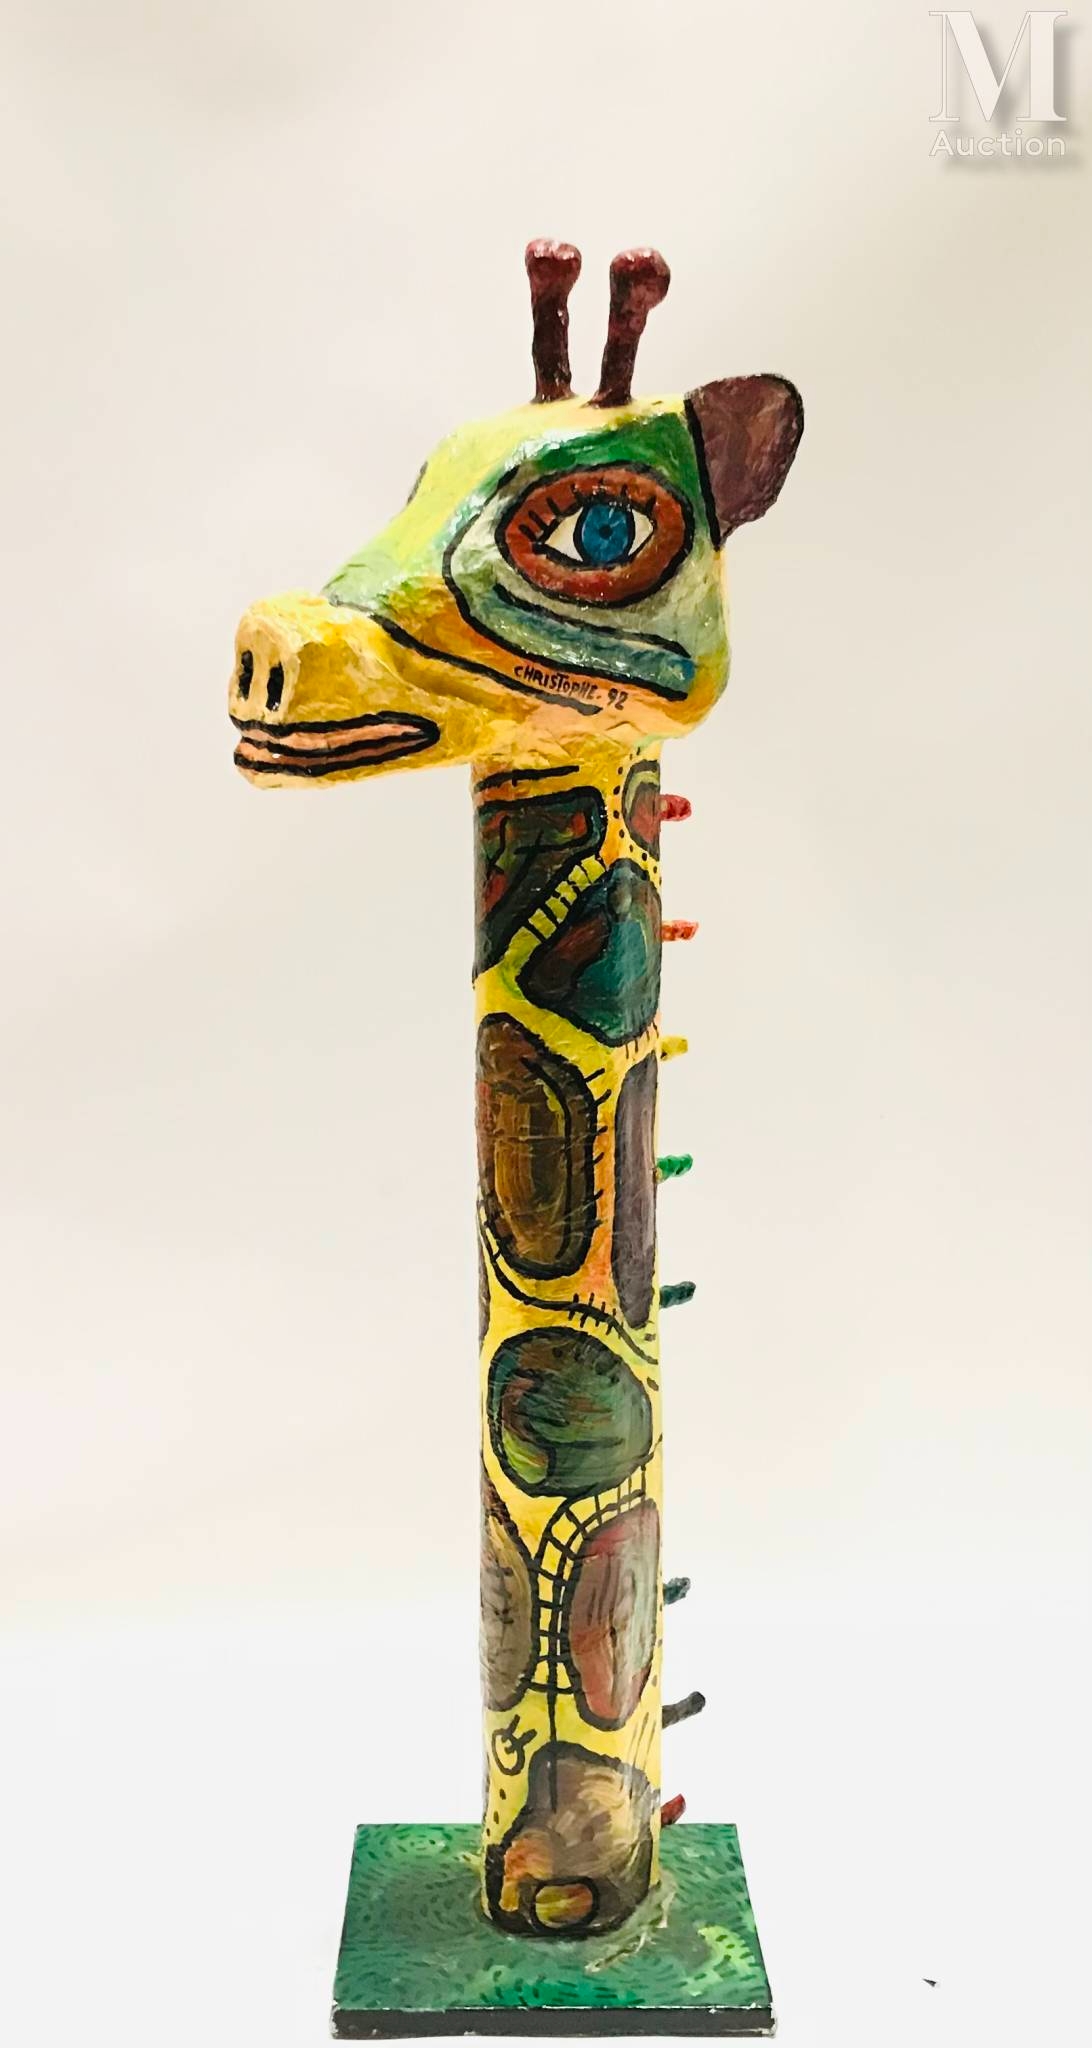 Artwork by Christophe, Totem à la tête de girafe, Made of Paper mache and gouache